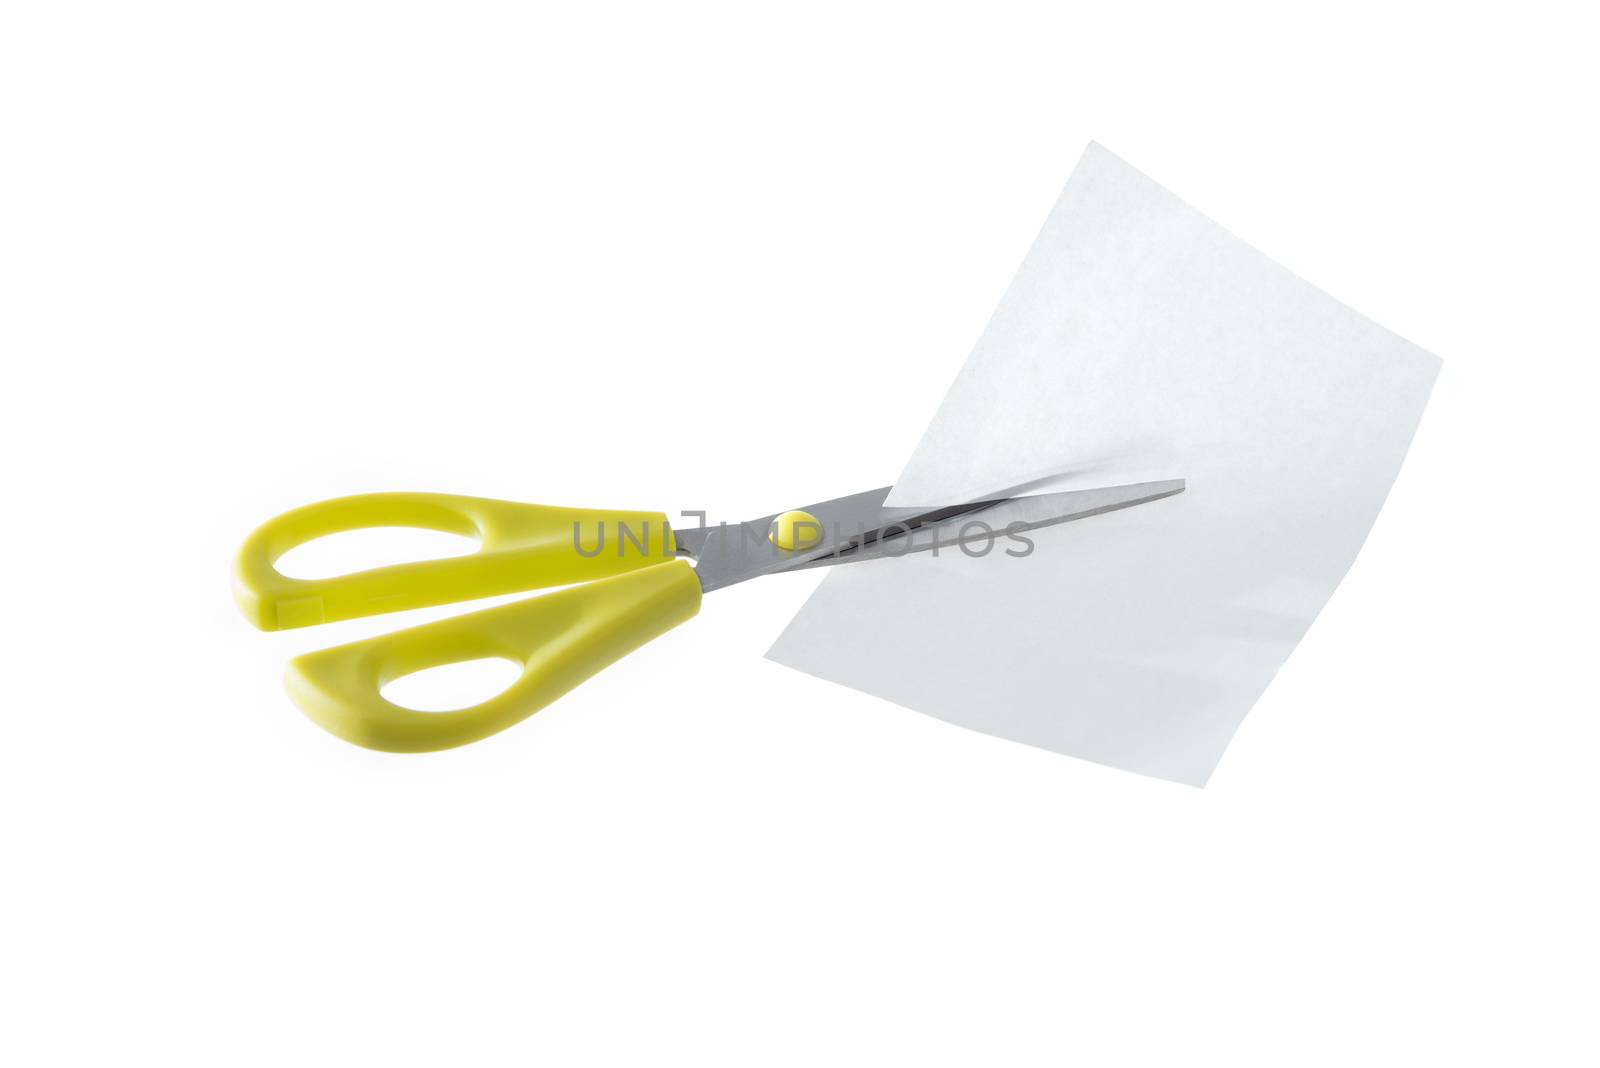 Scissors Cutting Paper by justtscott